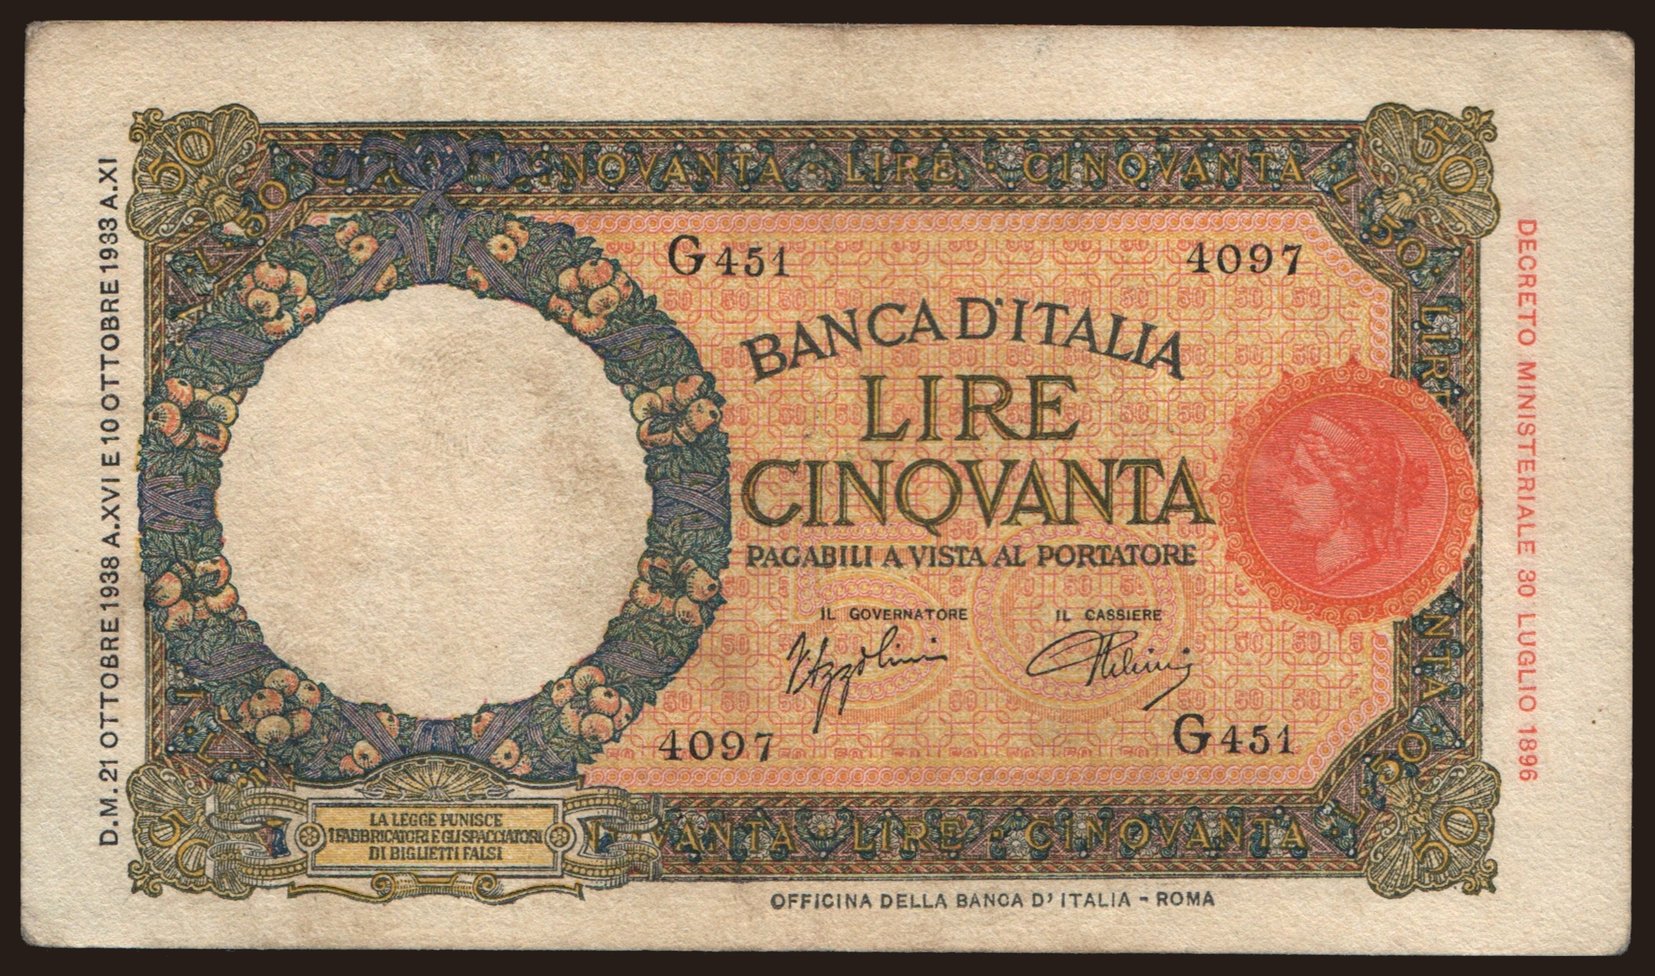 50 lire, 1938